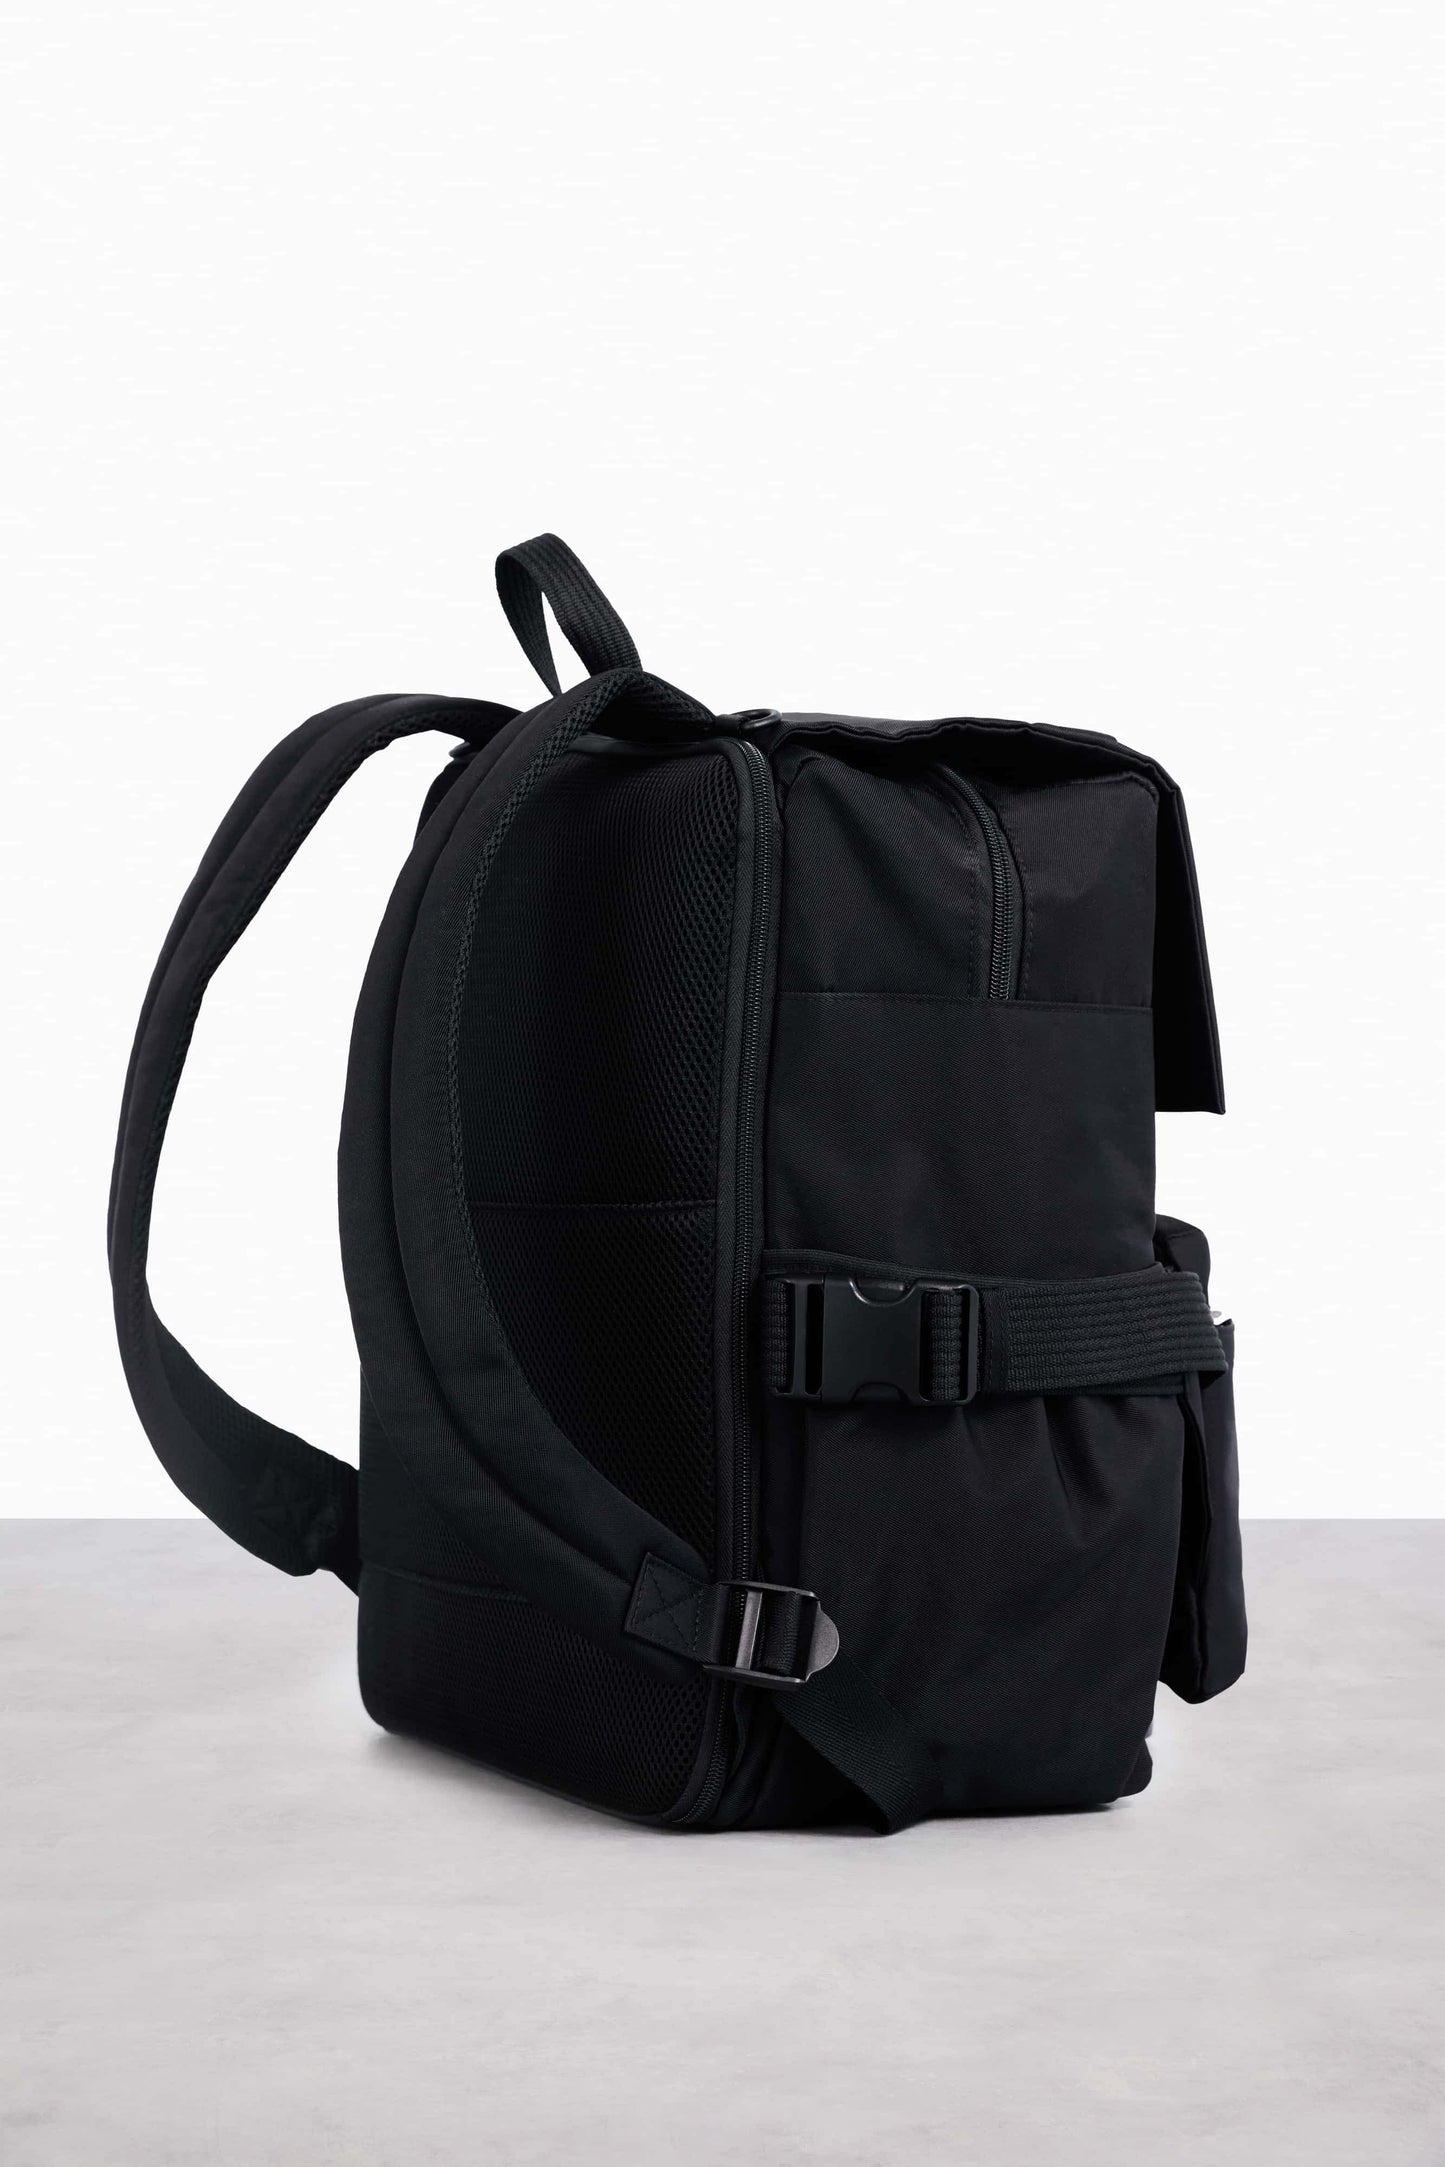 The Ultimate Diaper Backpack in Black